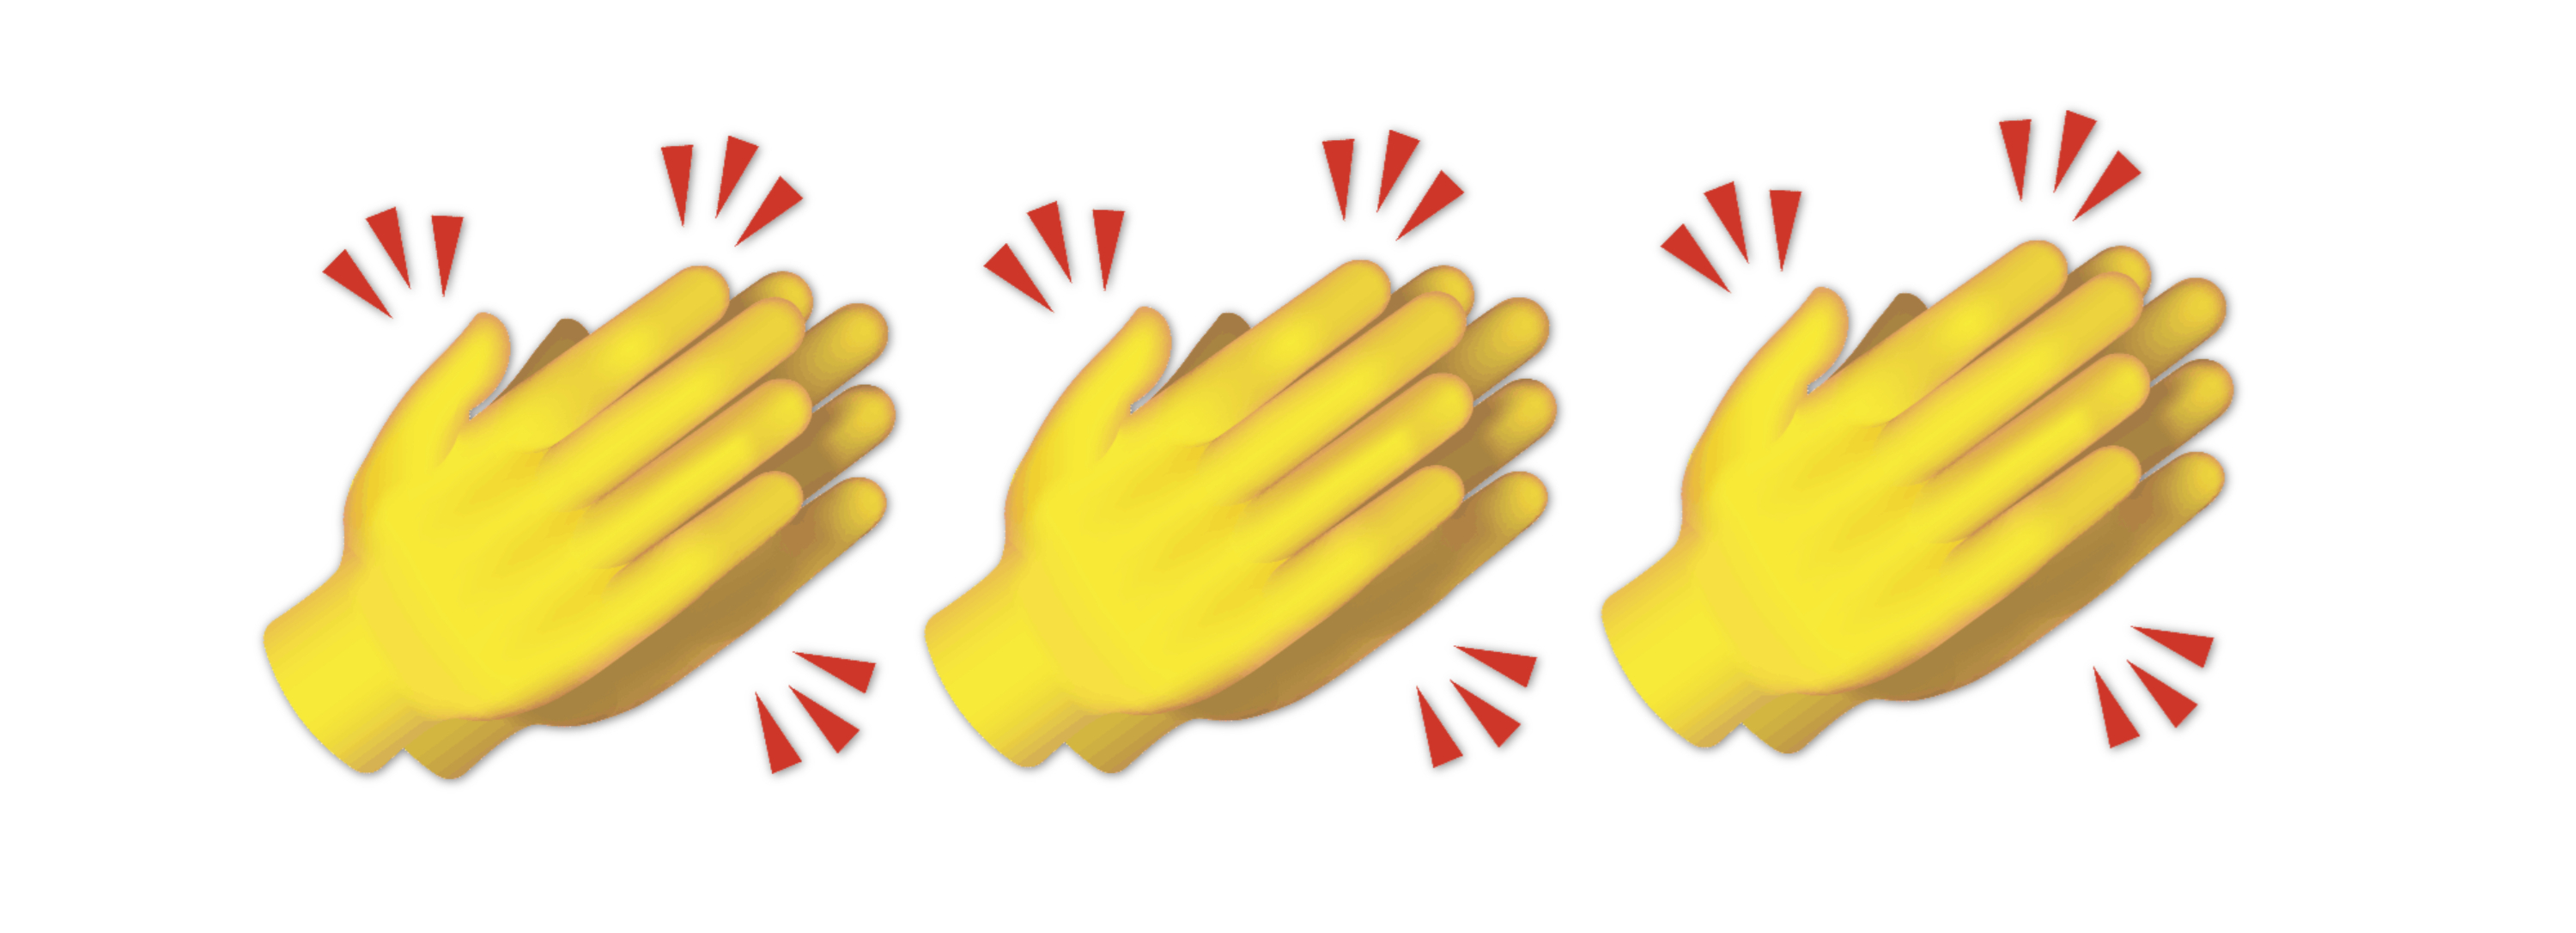 Clapping hand emojis